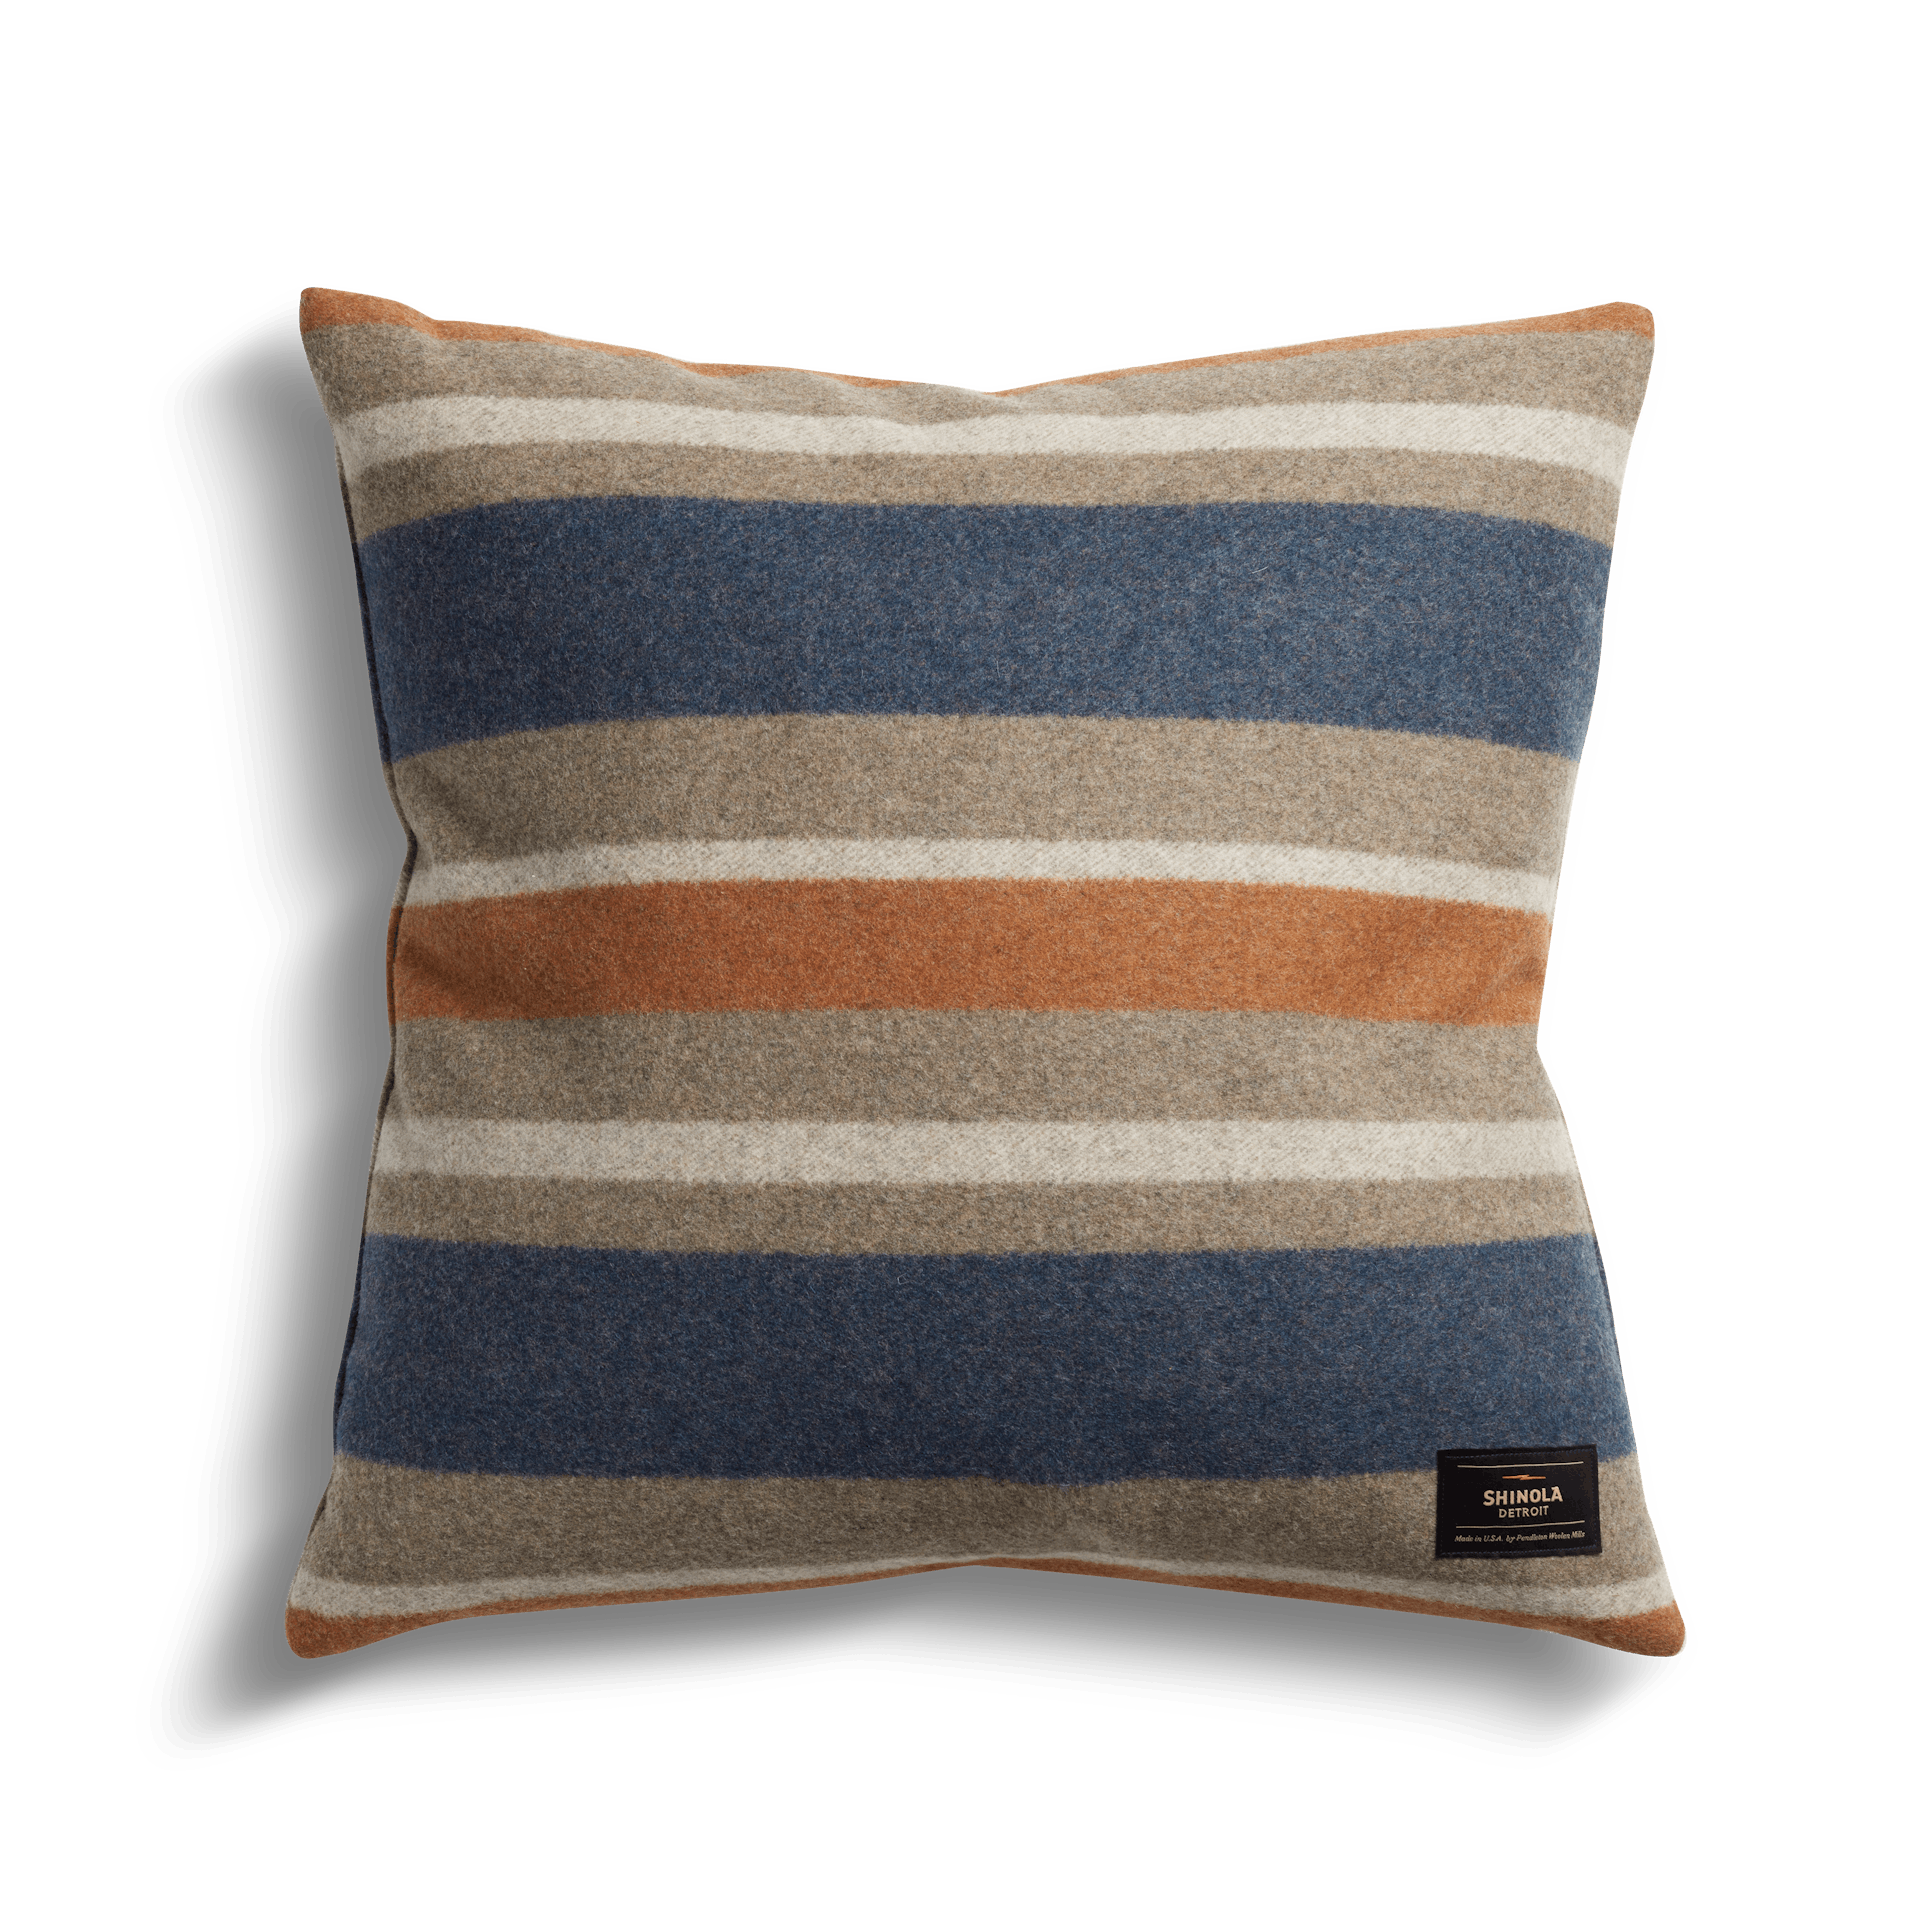 Shinola Wool Stripe Pillow 